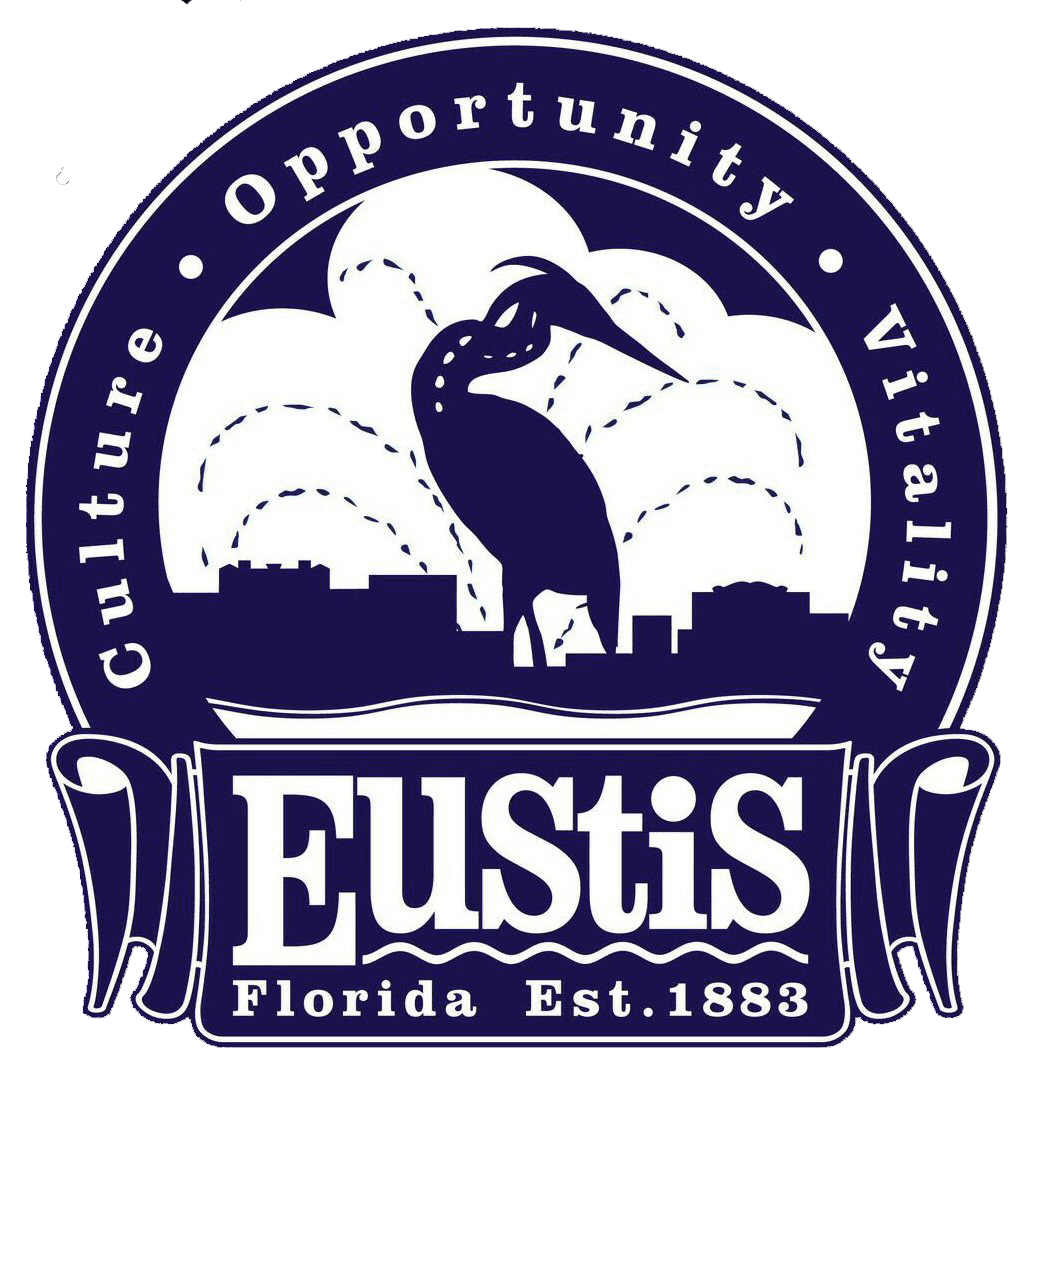 City of Eustis